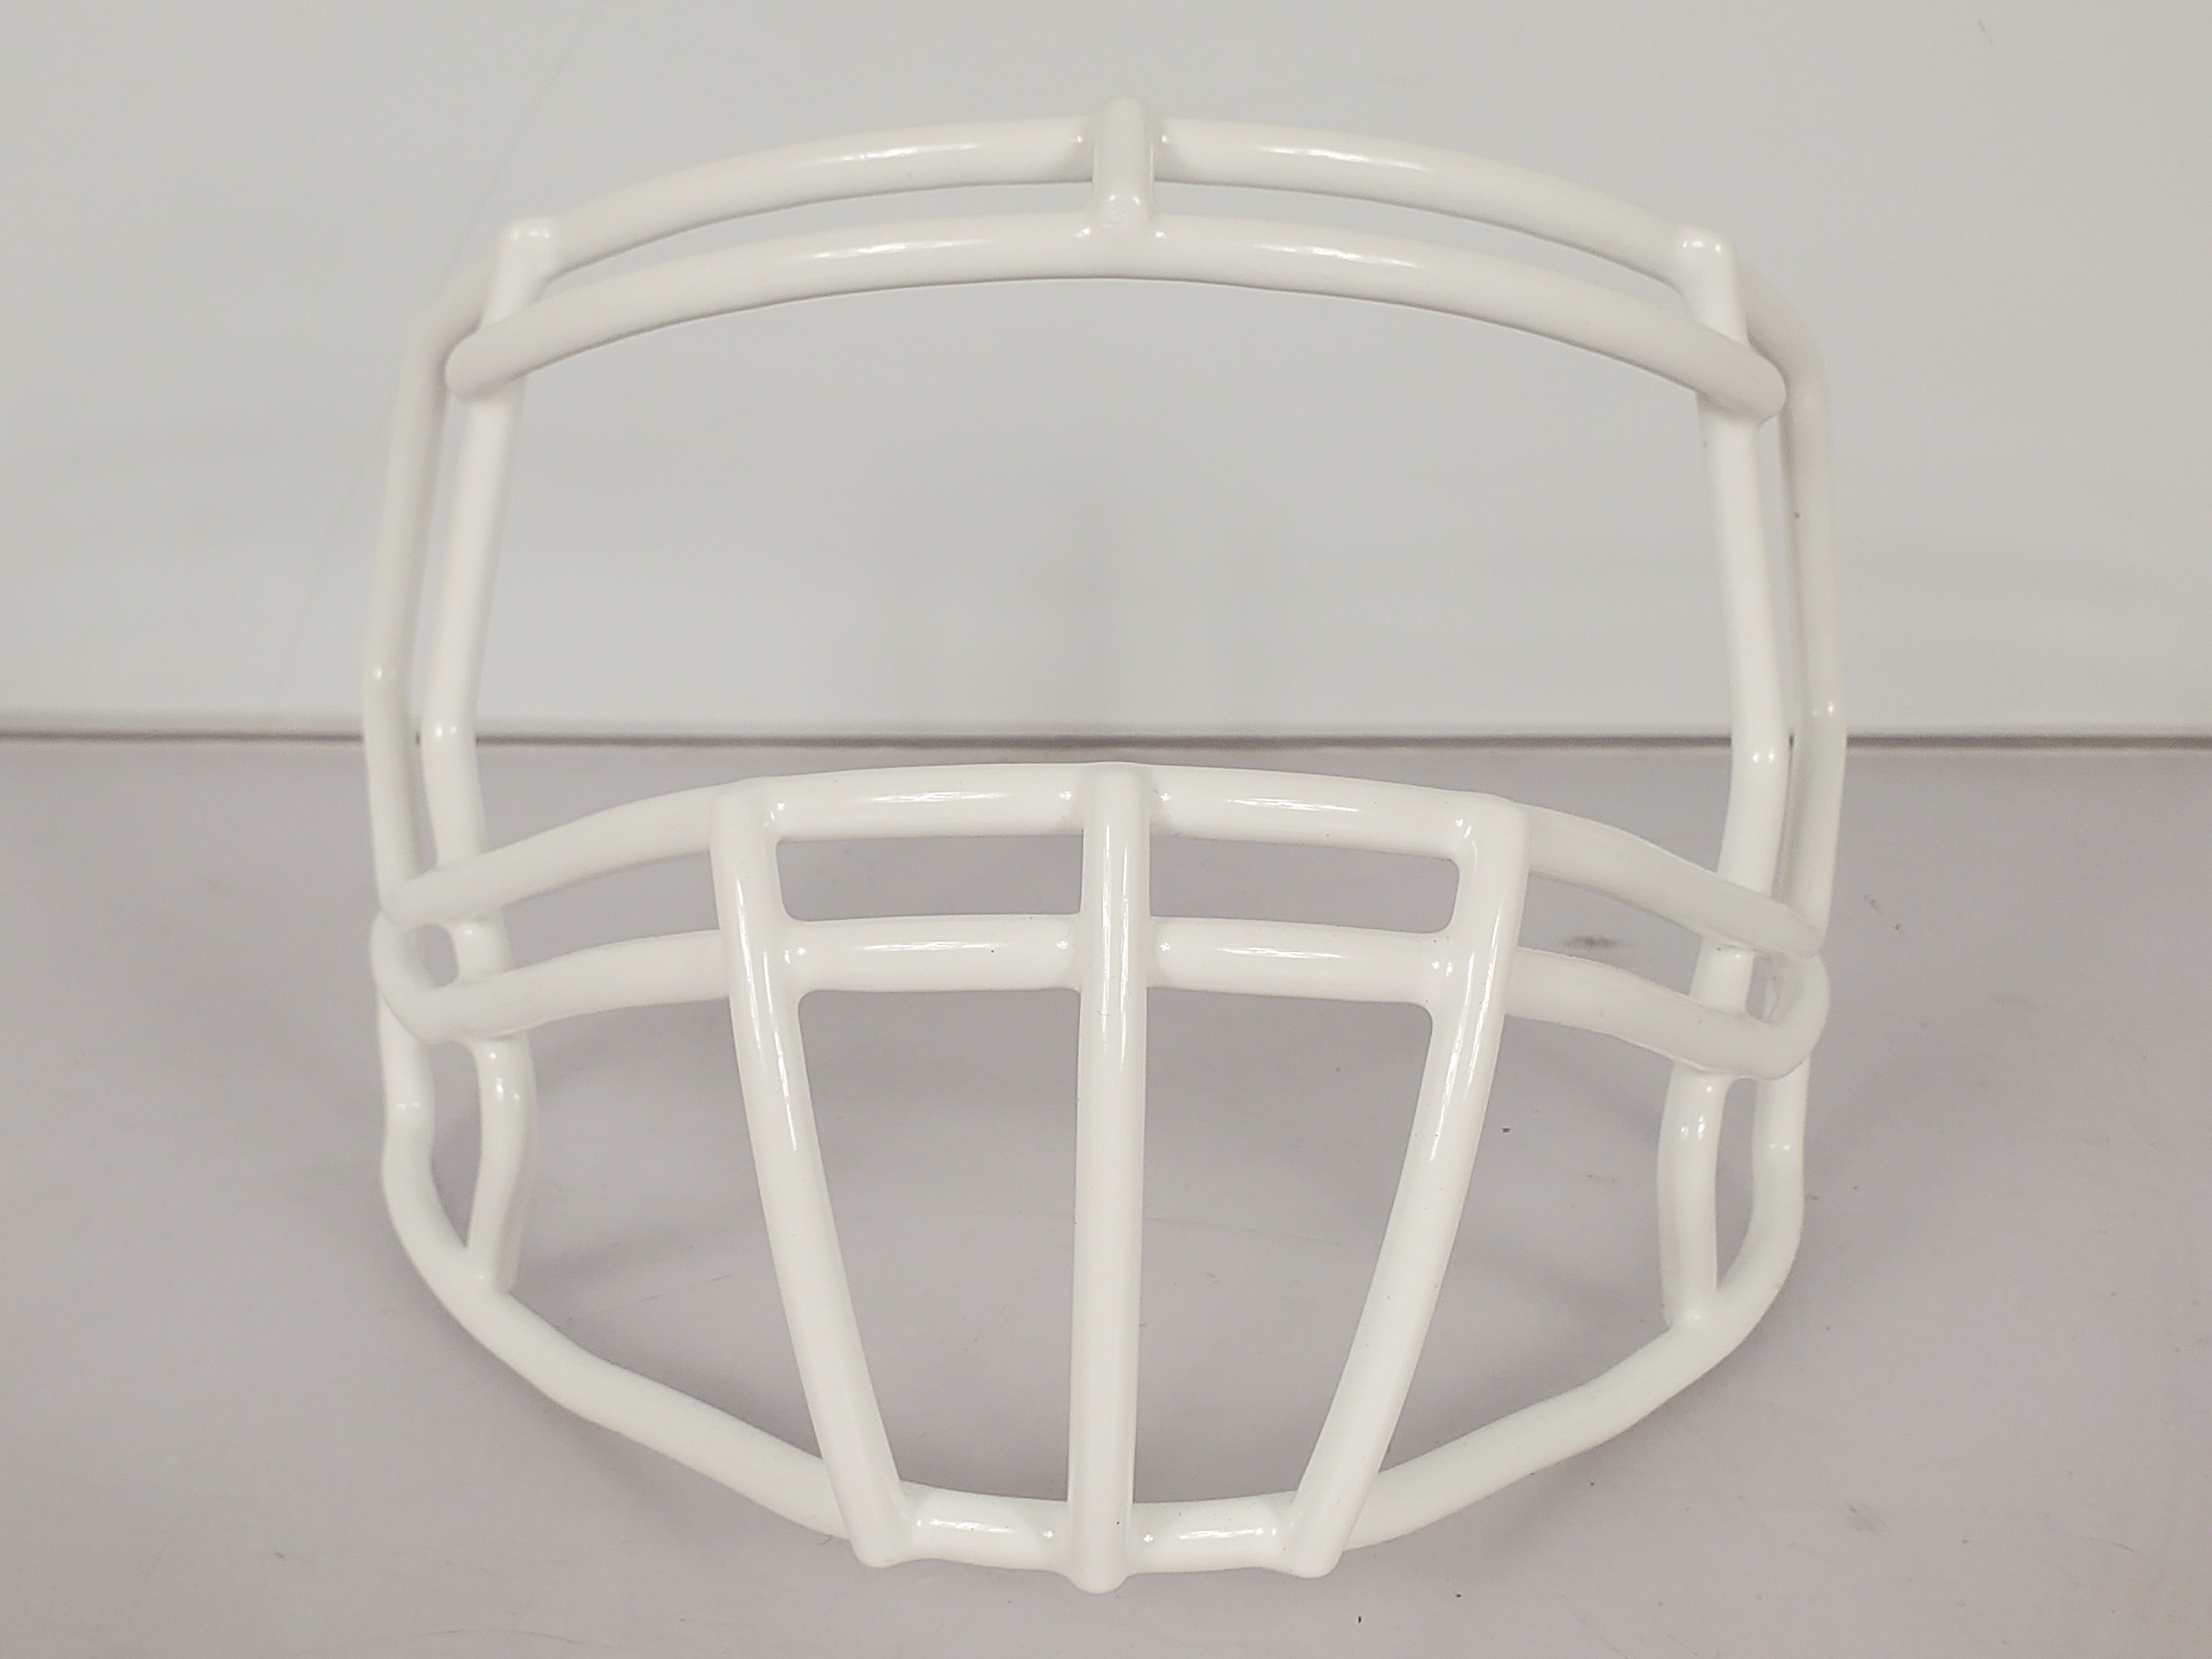 White Football Face Mask 4